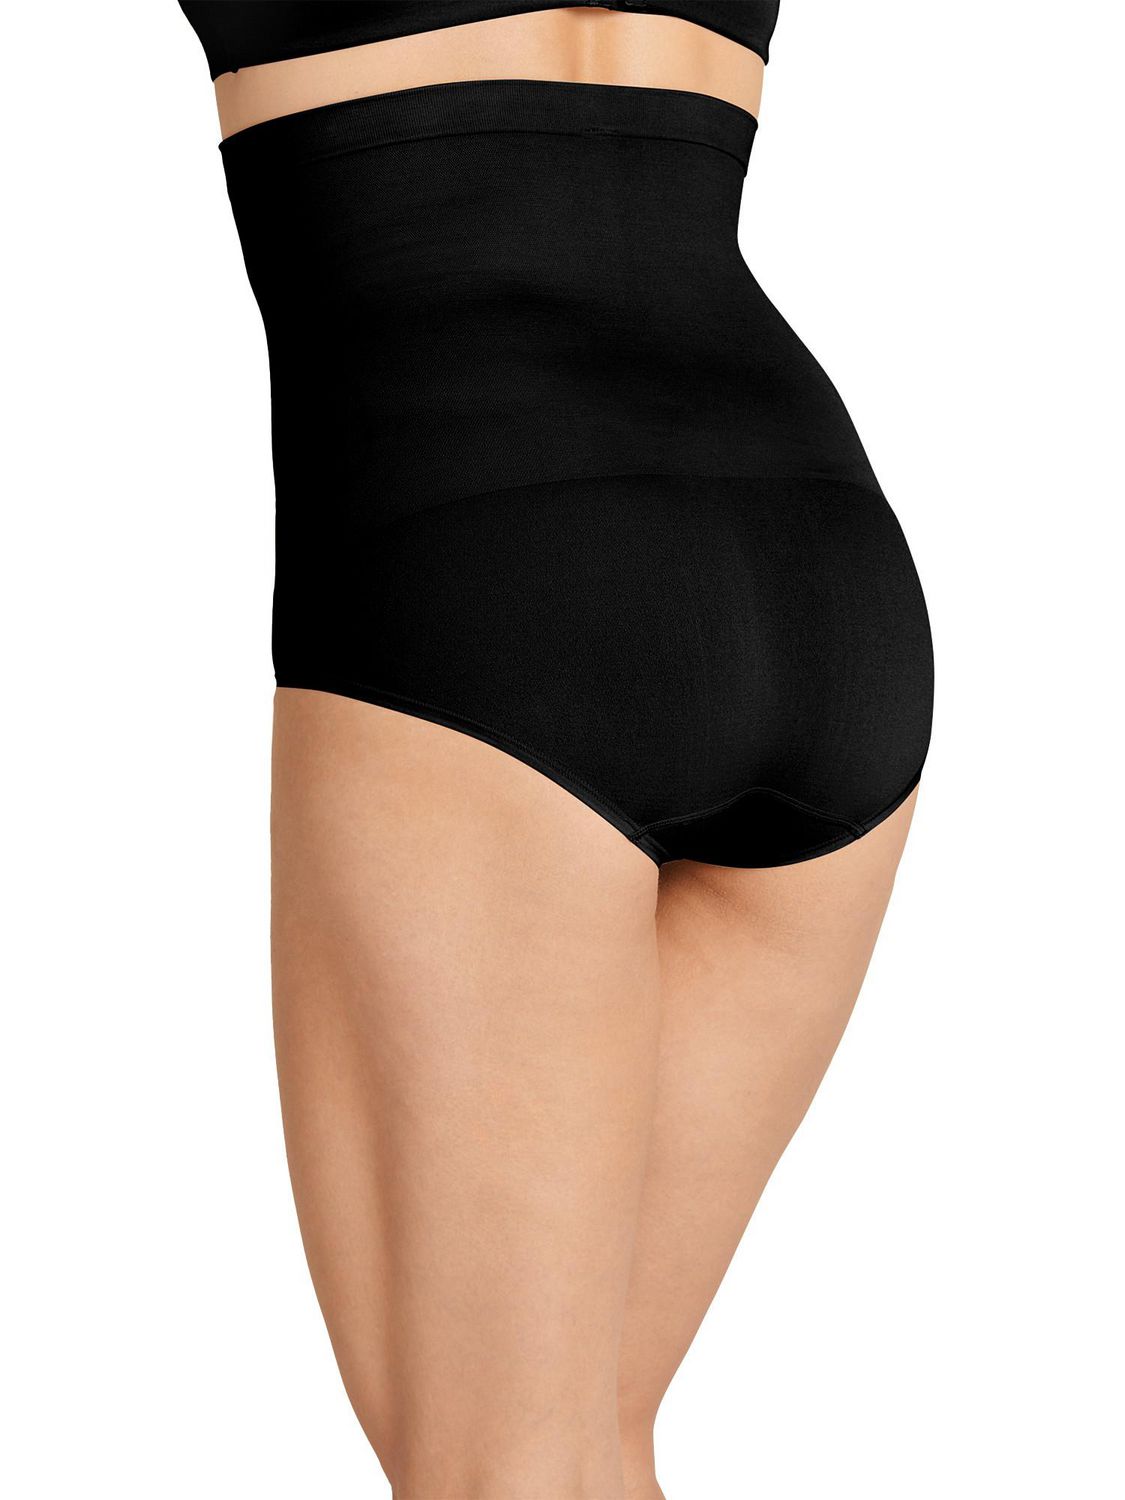 Jockey Generation Women's High-Waist Underwear - Beige L 1 ct